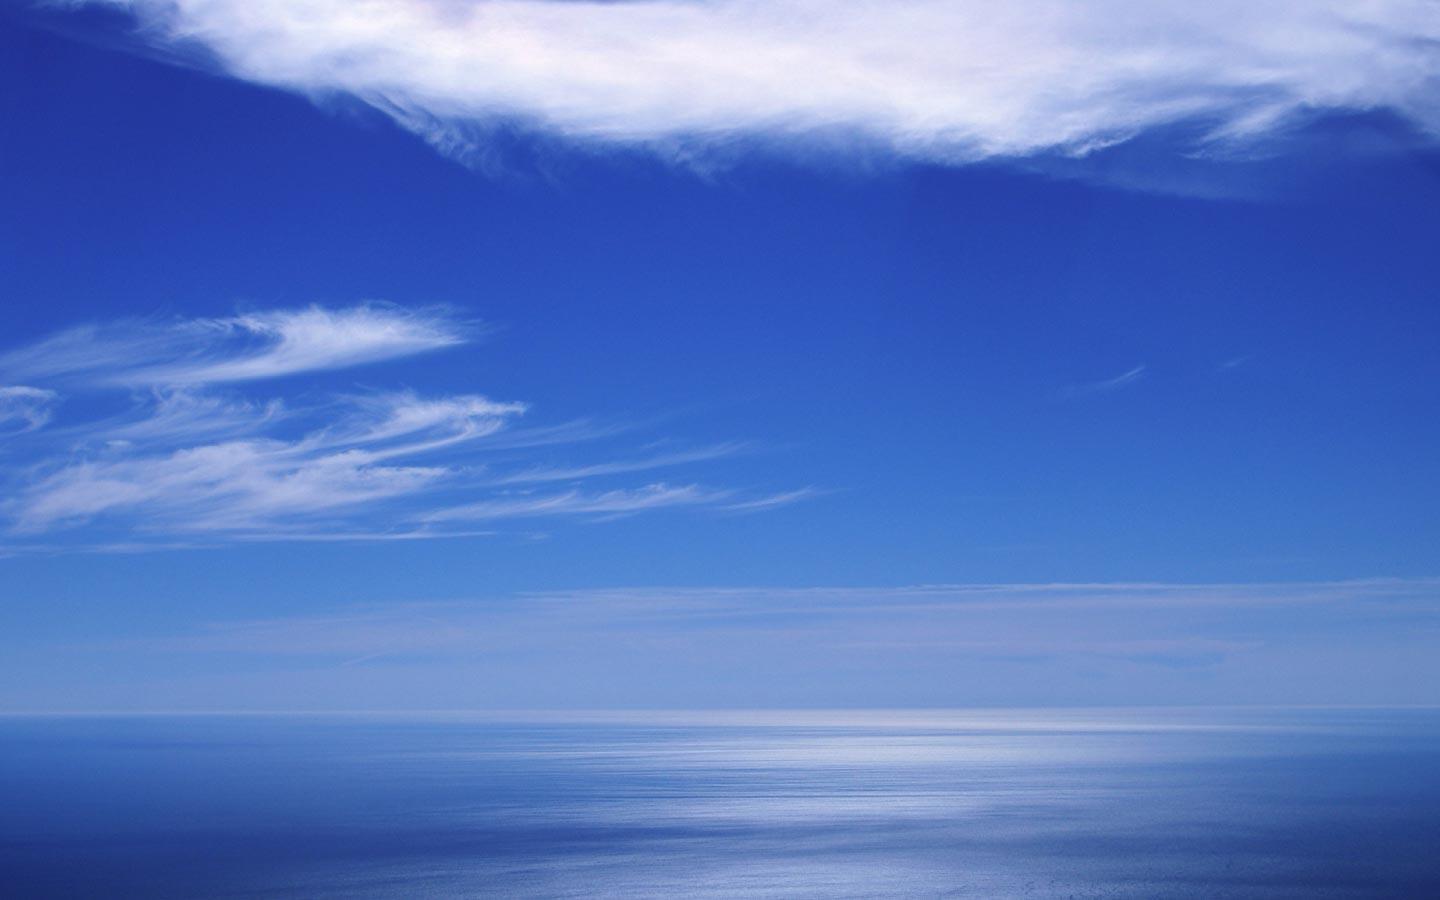 Blue ocean horizon free desktop background wallpaper image